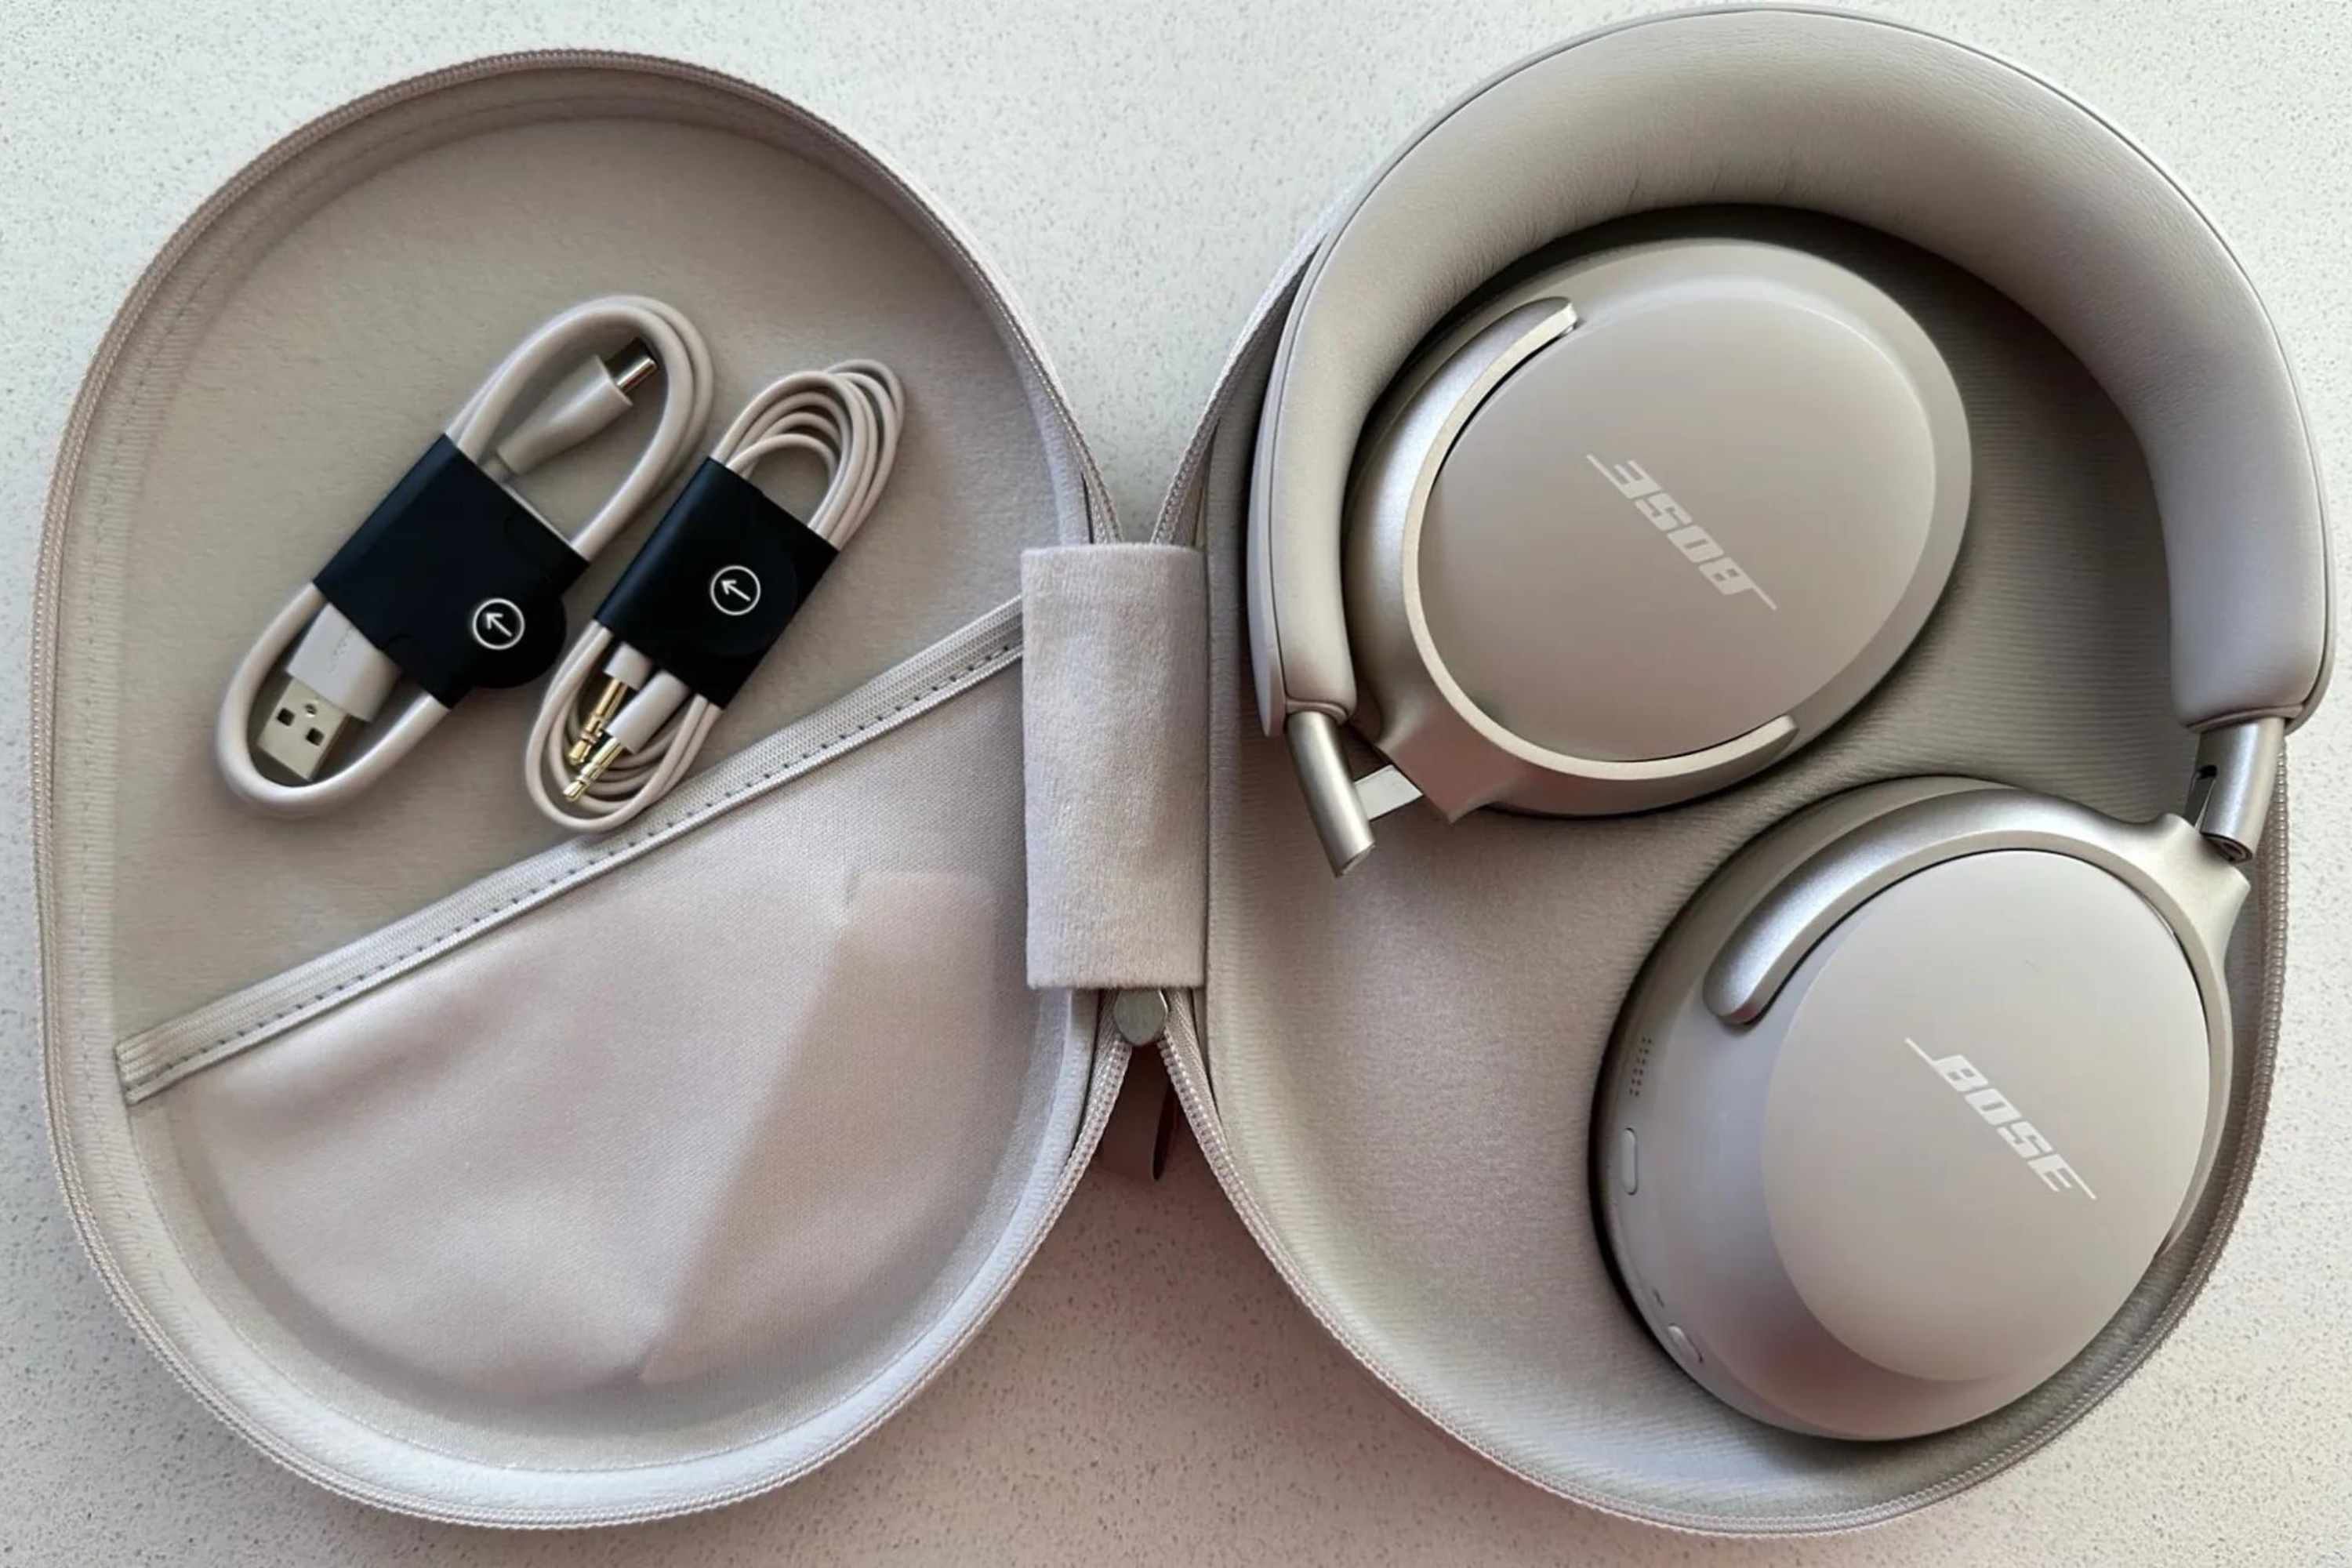 Bose QuietComfort Ultra headphones in cream with case and accessories